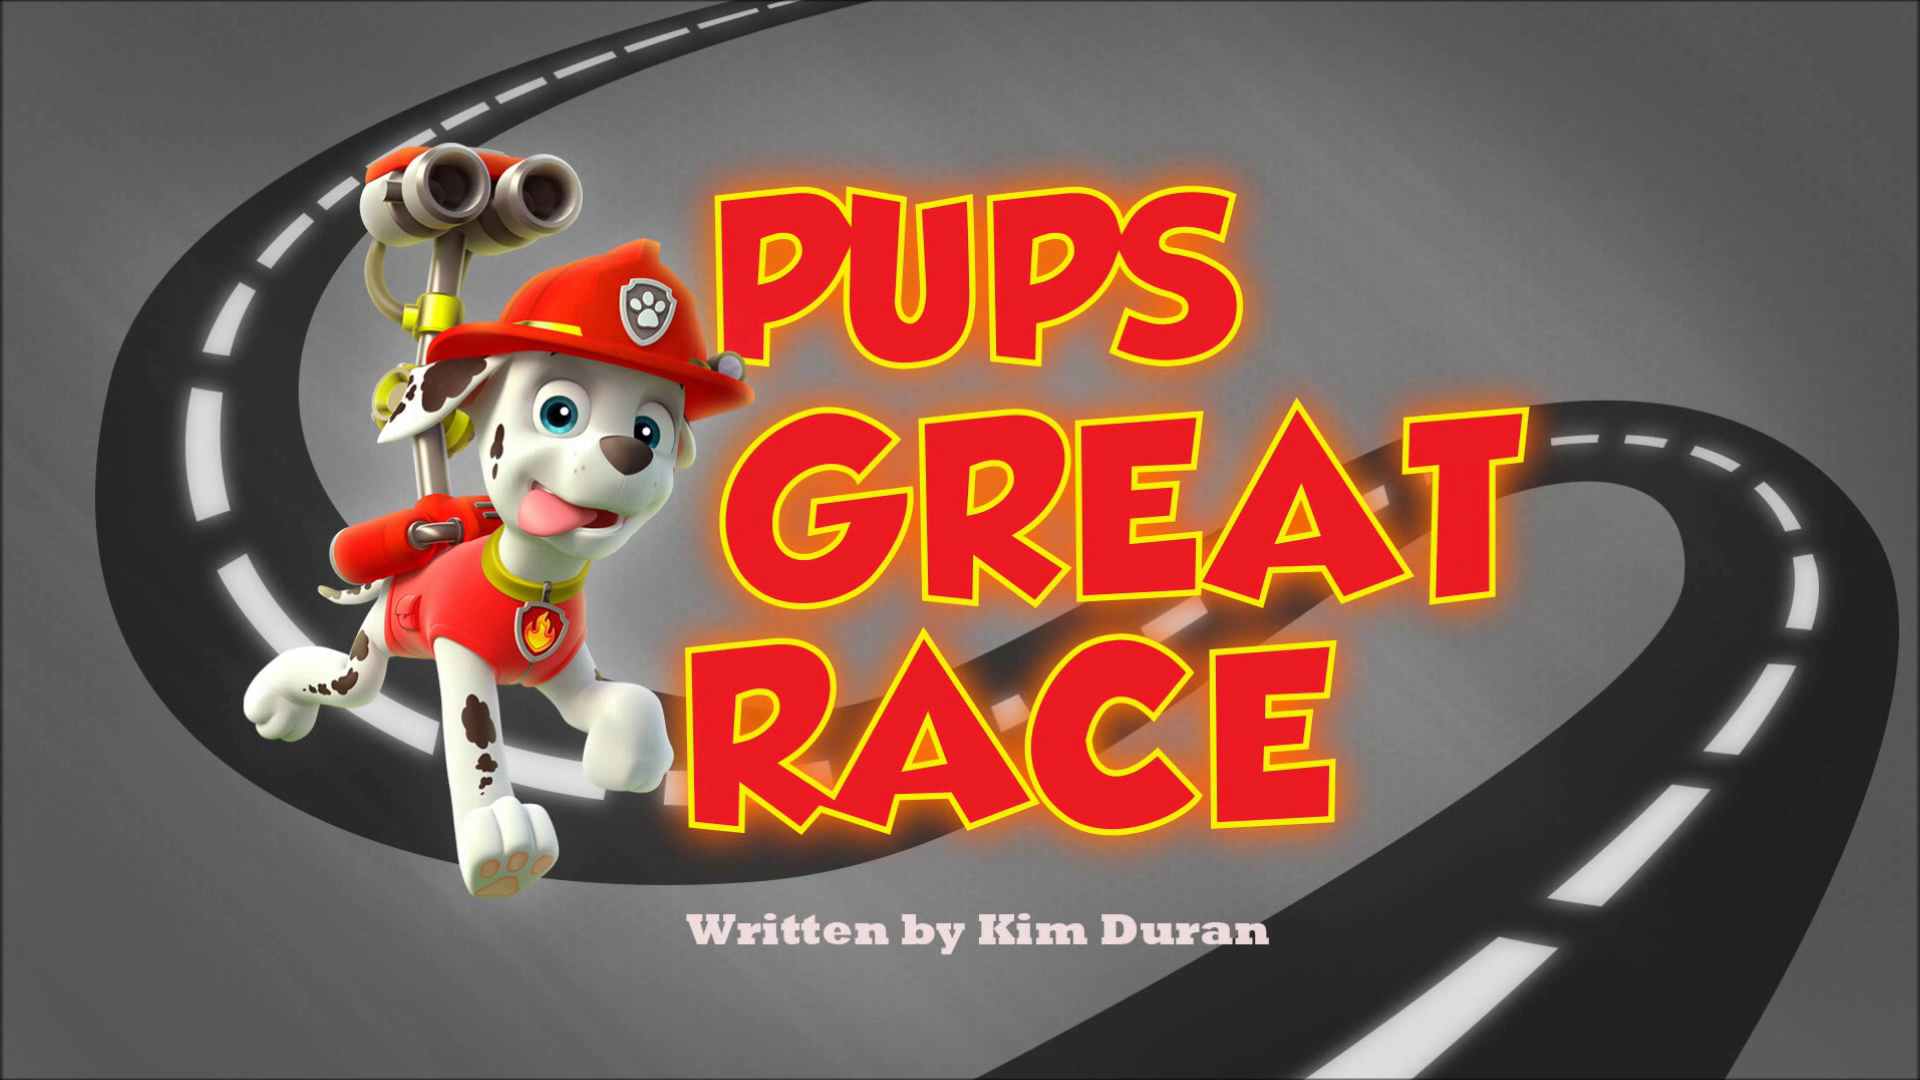 paw patrol pup racers game